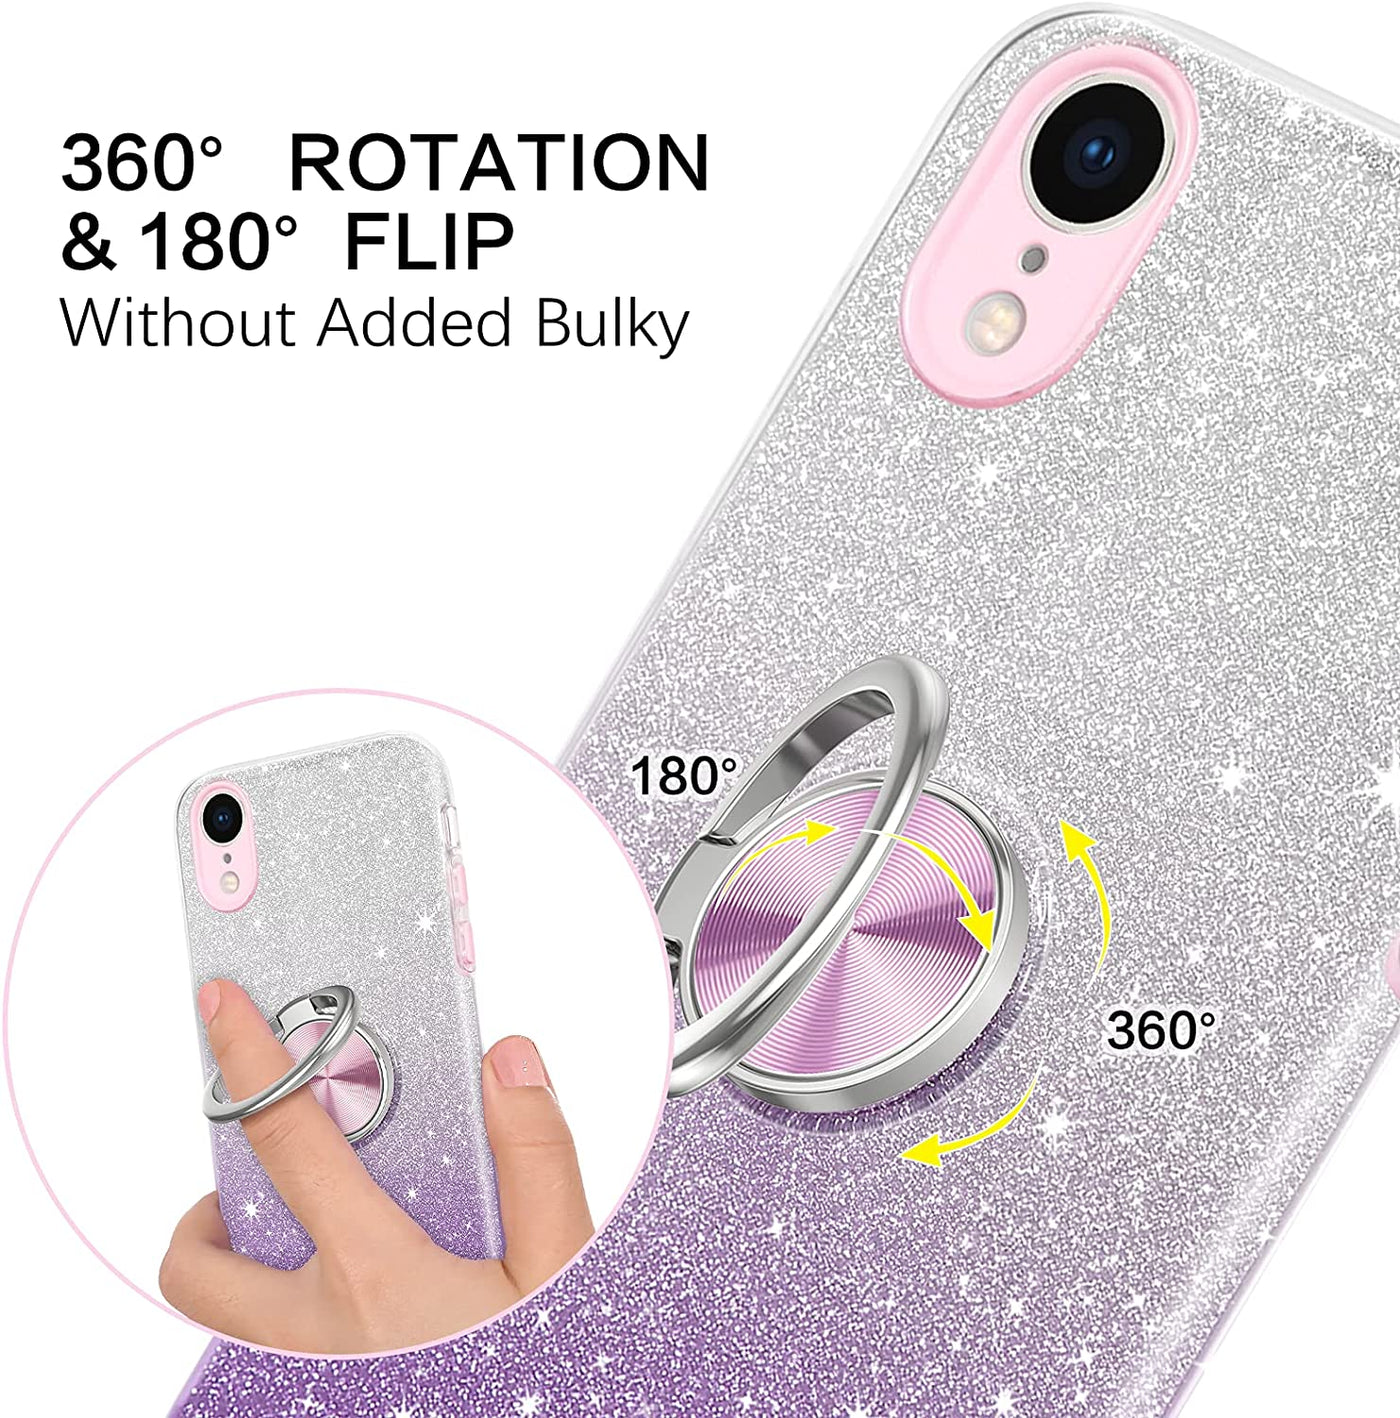 Glitter Shade - iPhone XR Case